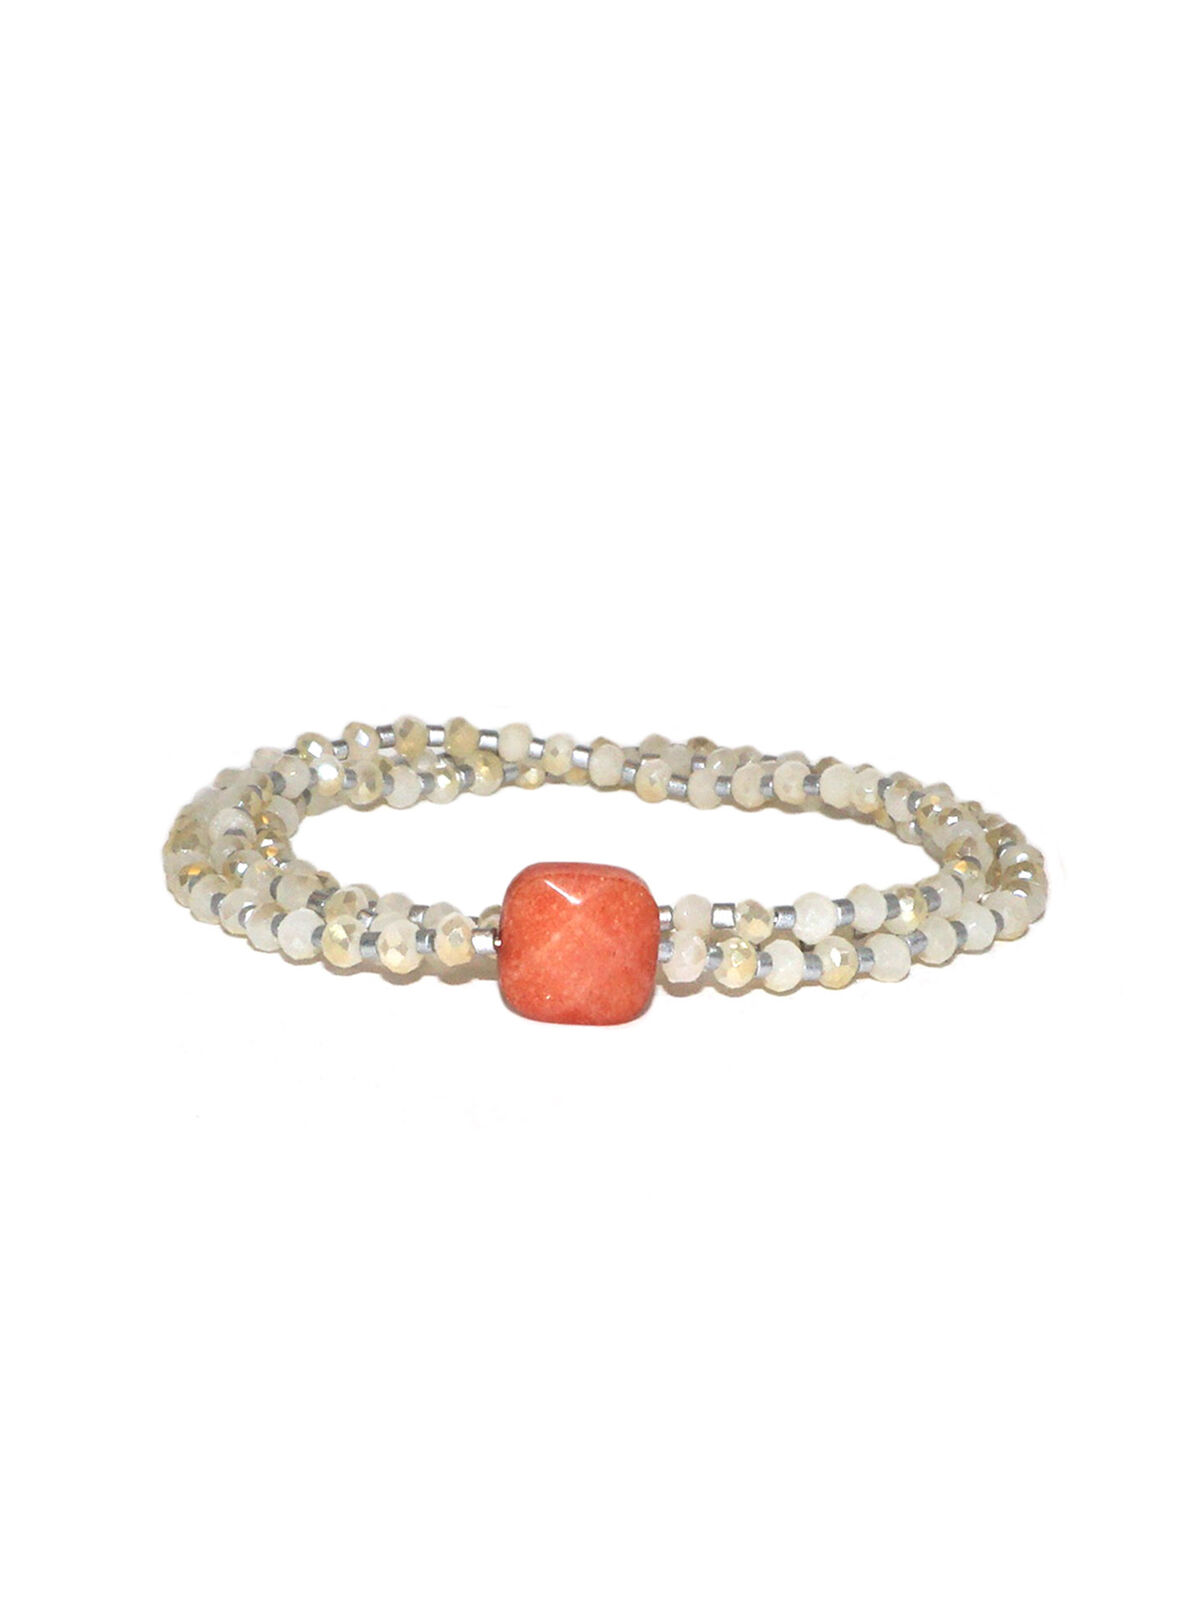 Marlyn Schiff - Stone Charm Beaded Bracelet